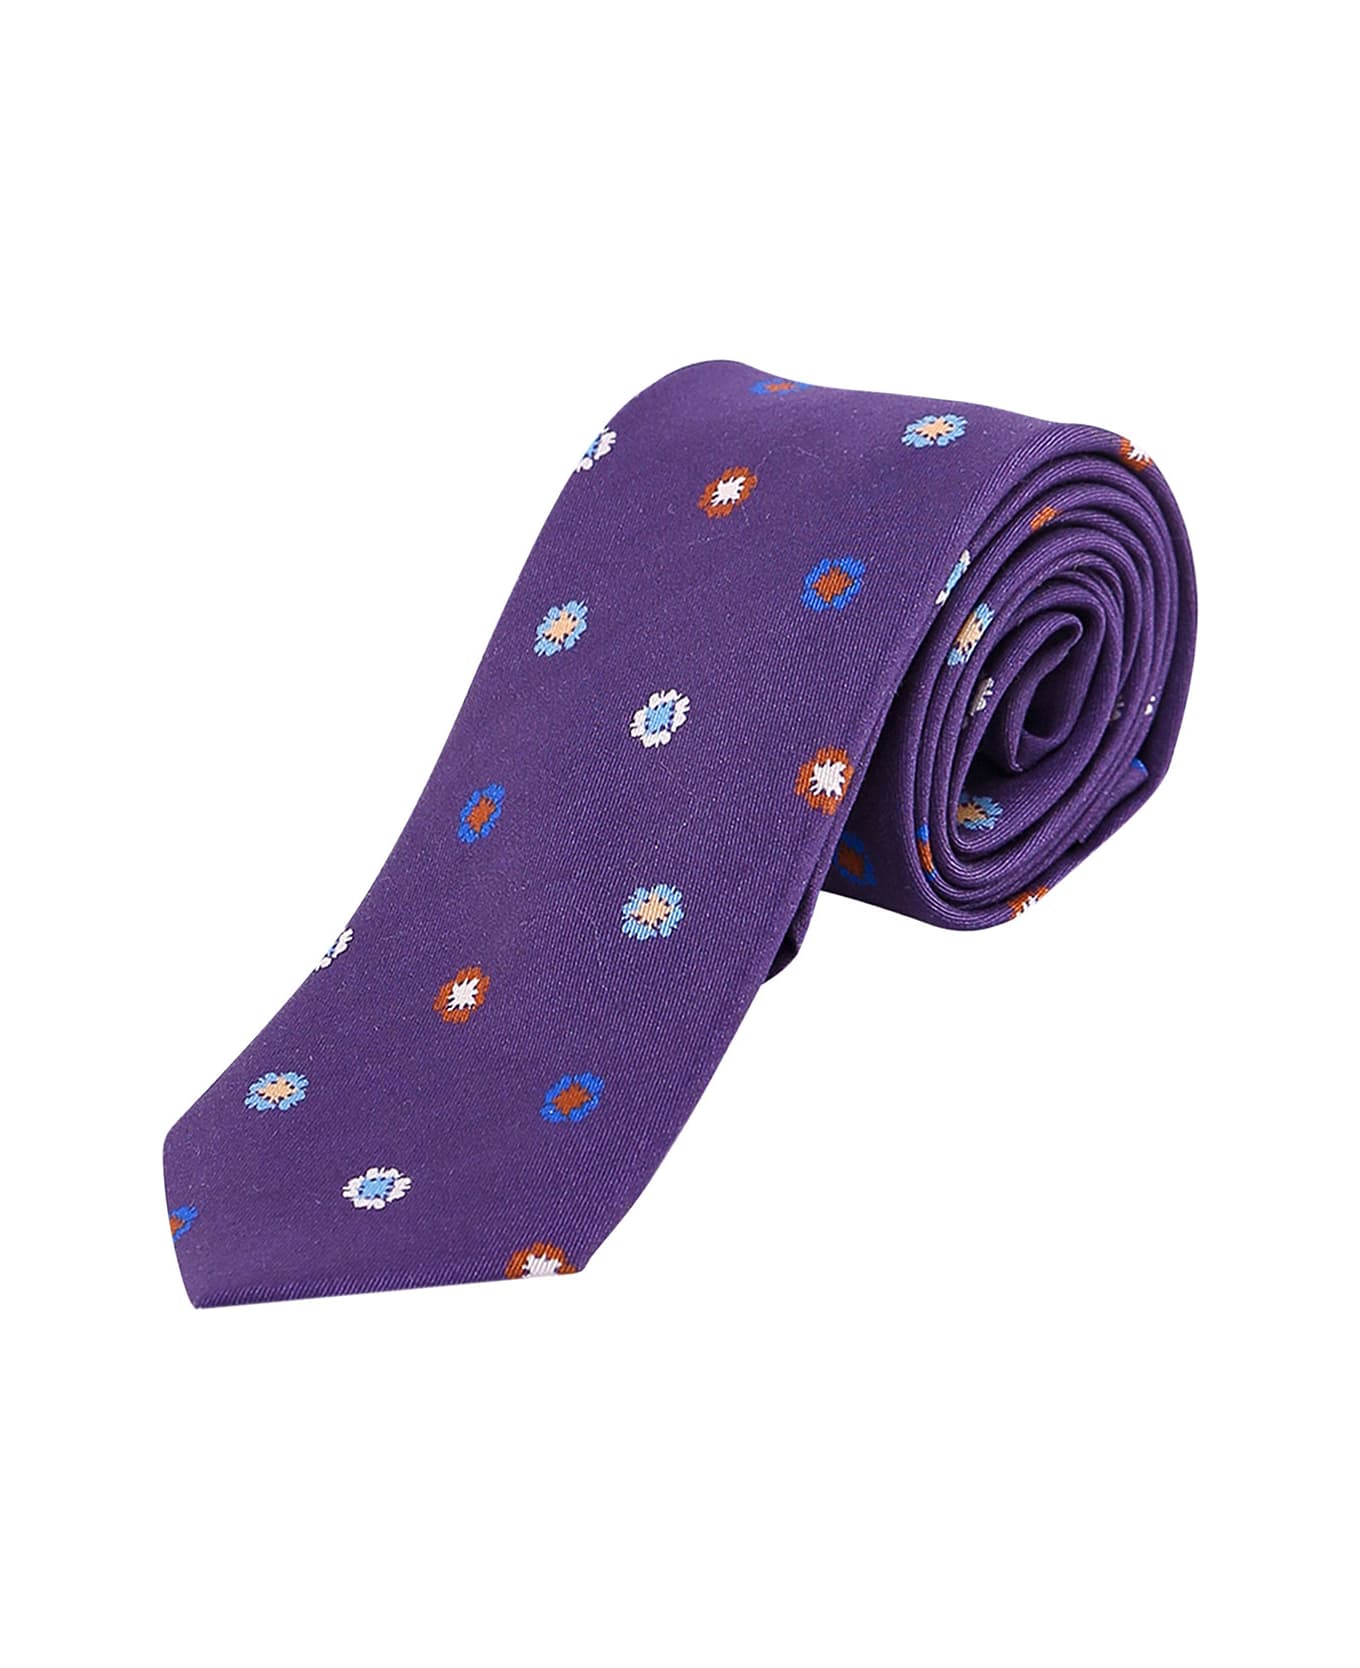 Nicky Tie - Purple